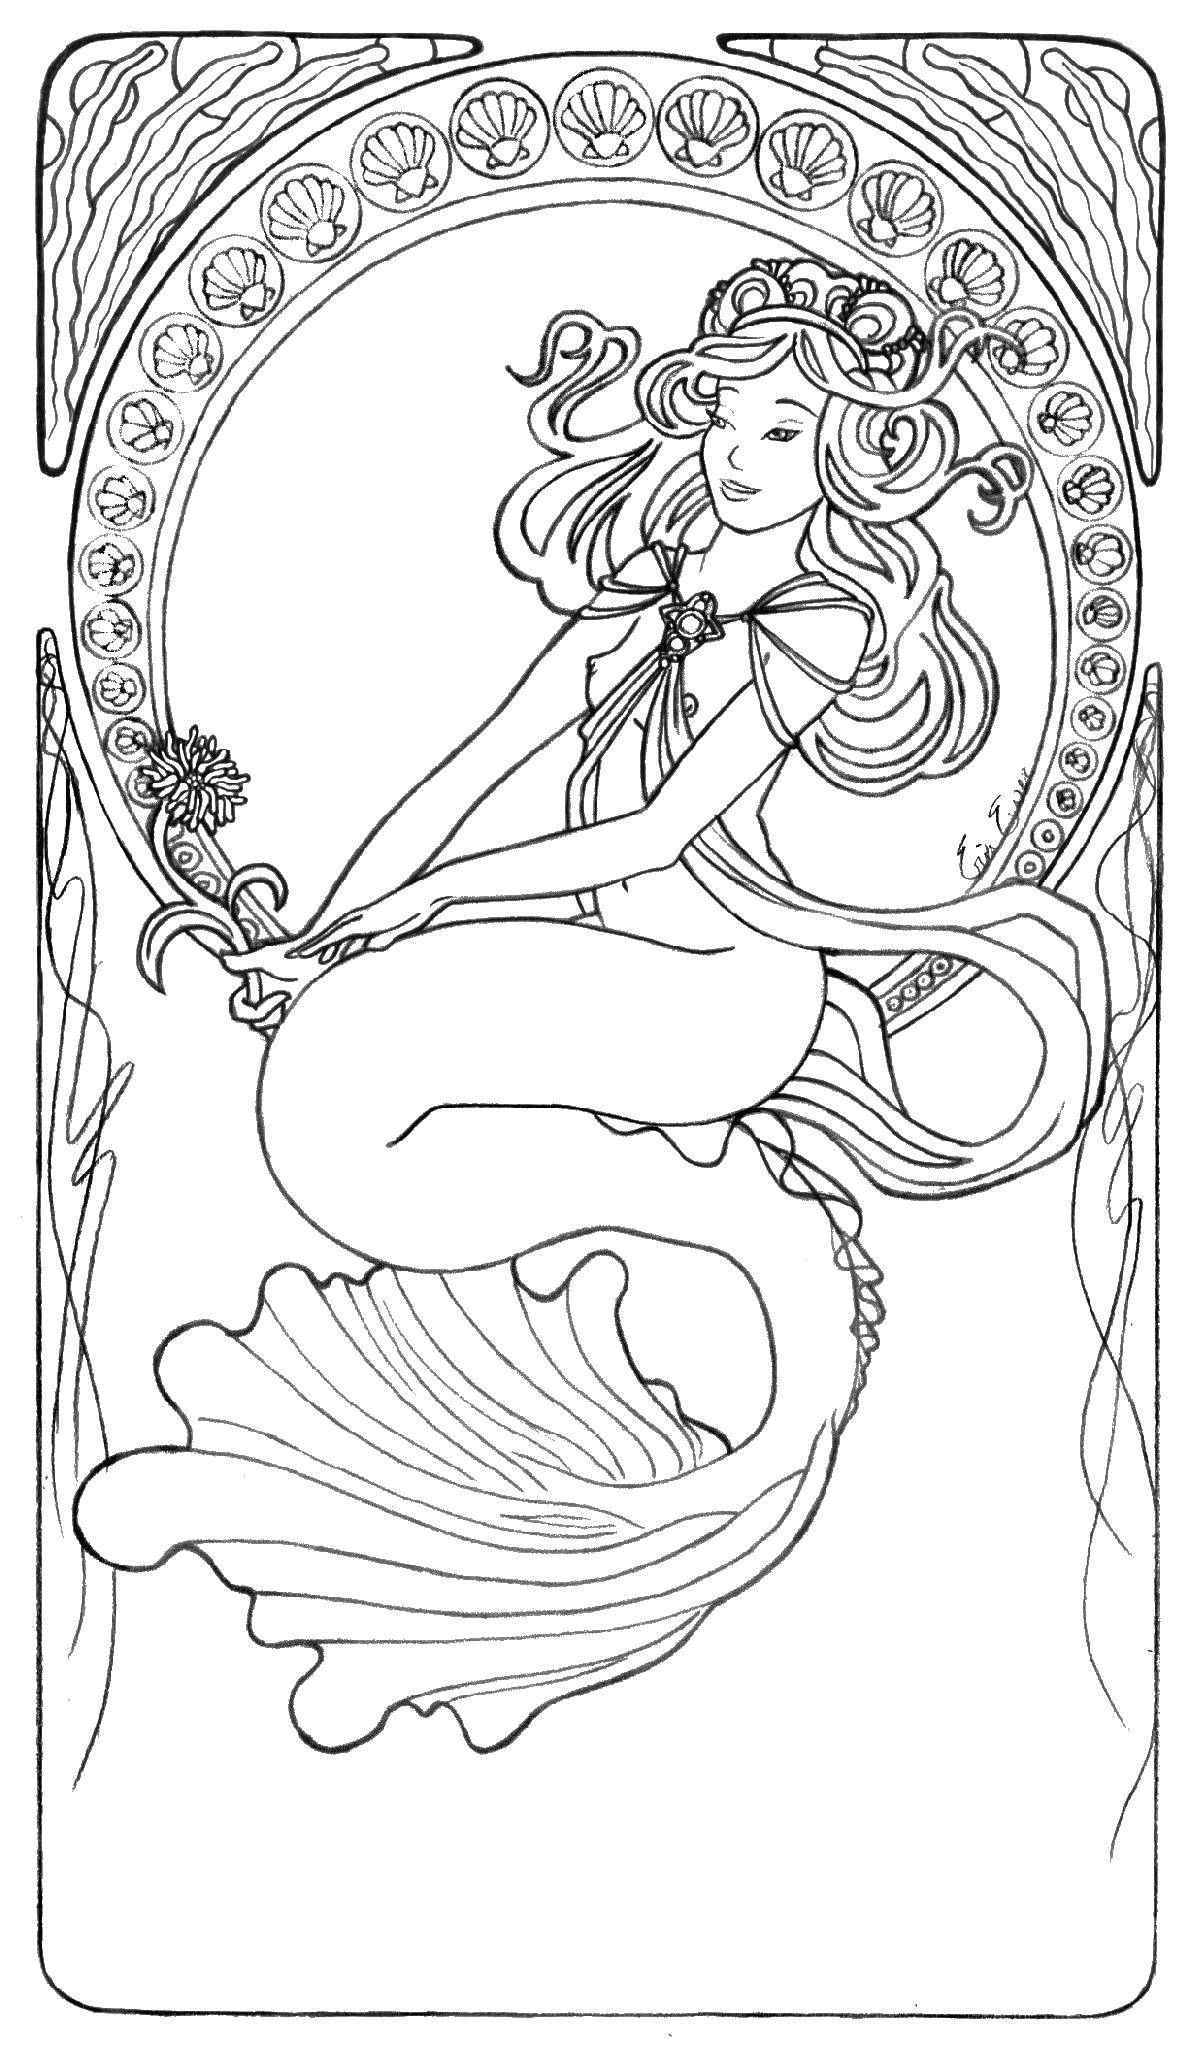 Coloring Mermaid. Category Fantasy. Tags:  fantasy, mermaid, water, fairy tale.